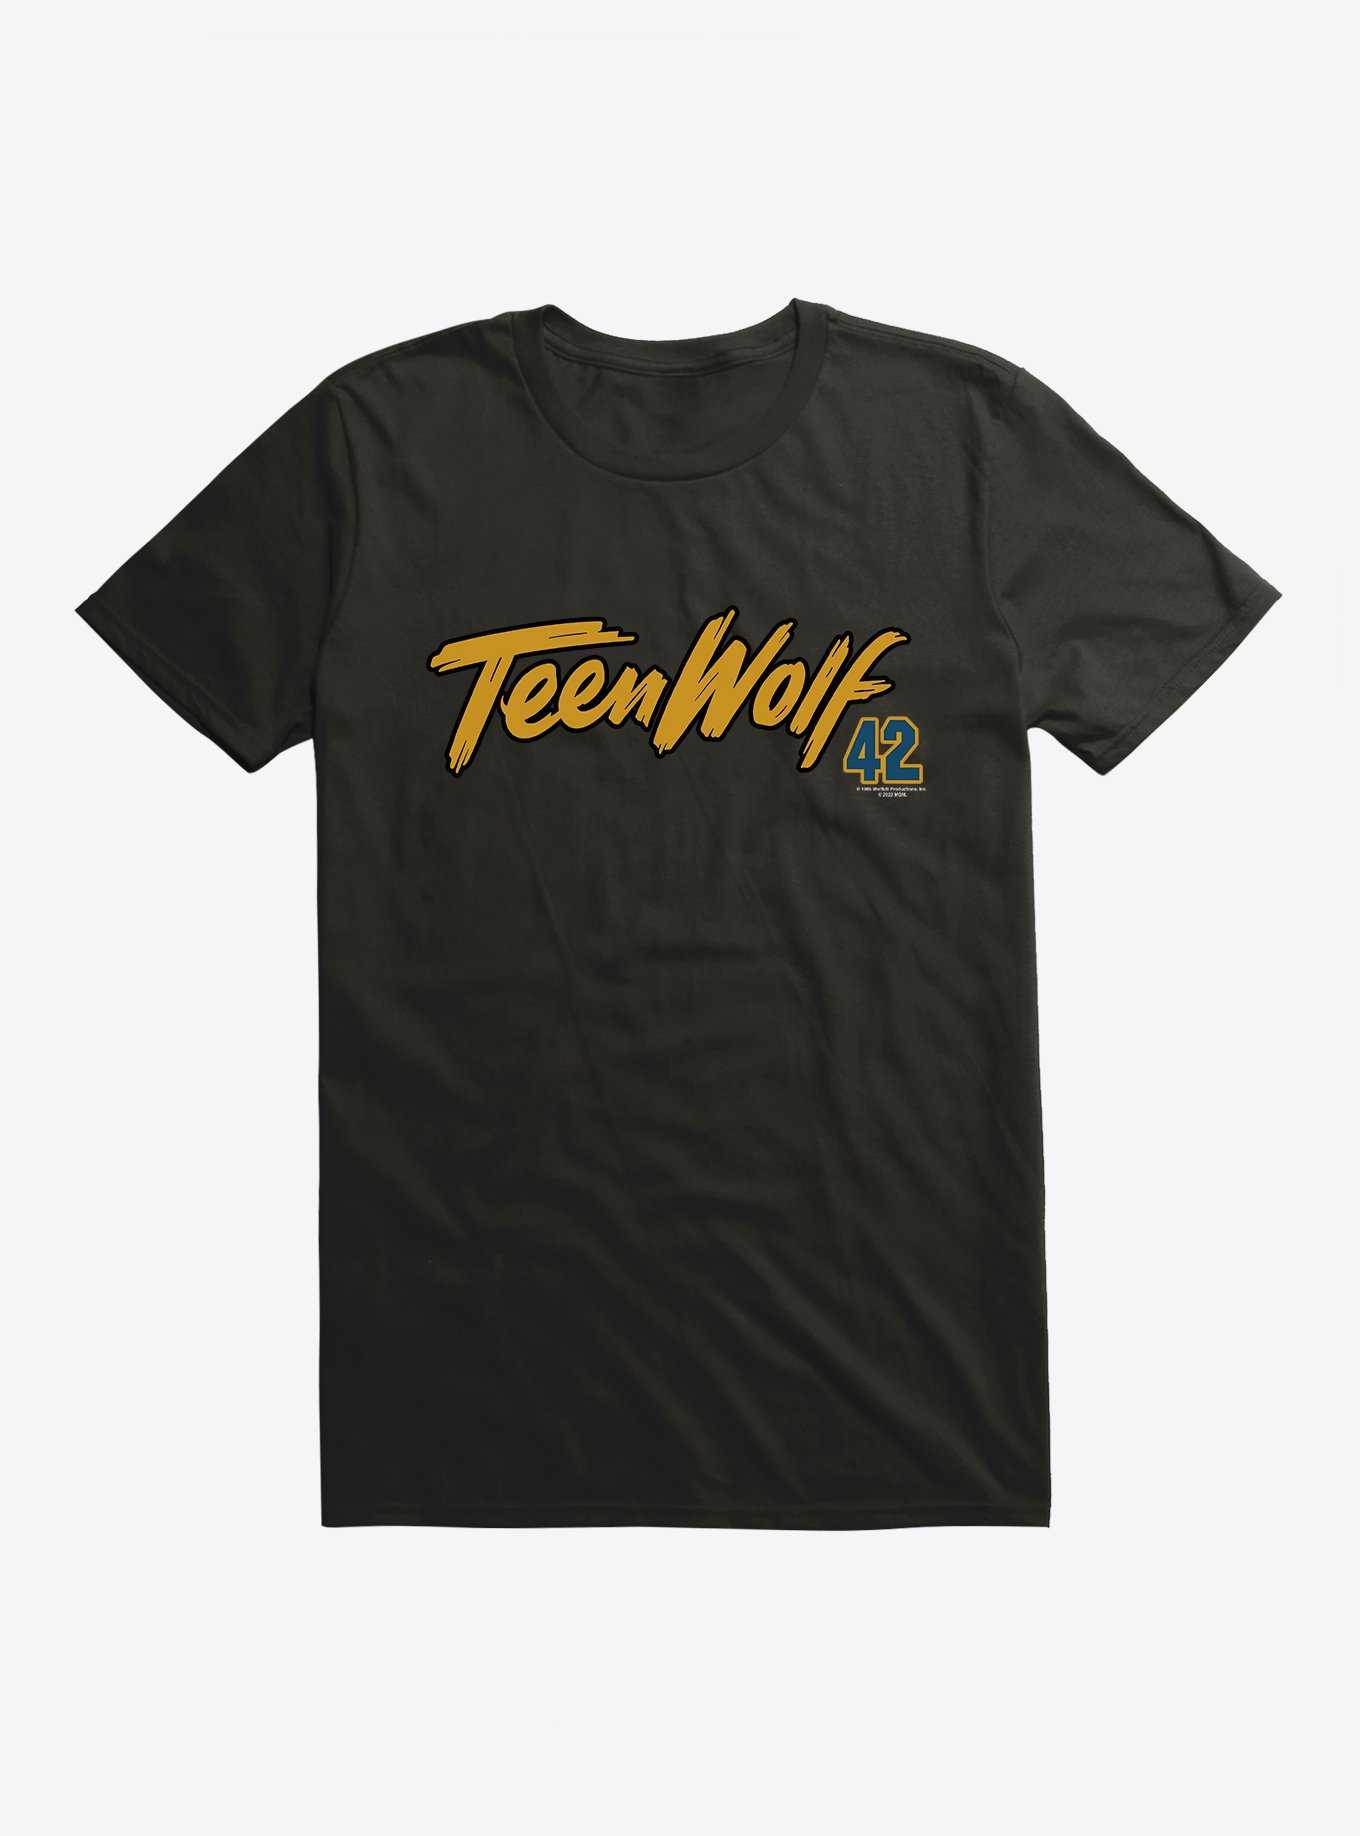 Teen Wolf TeenWolf 42 T-Shirt, , hi-res